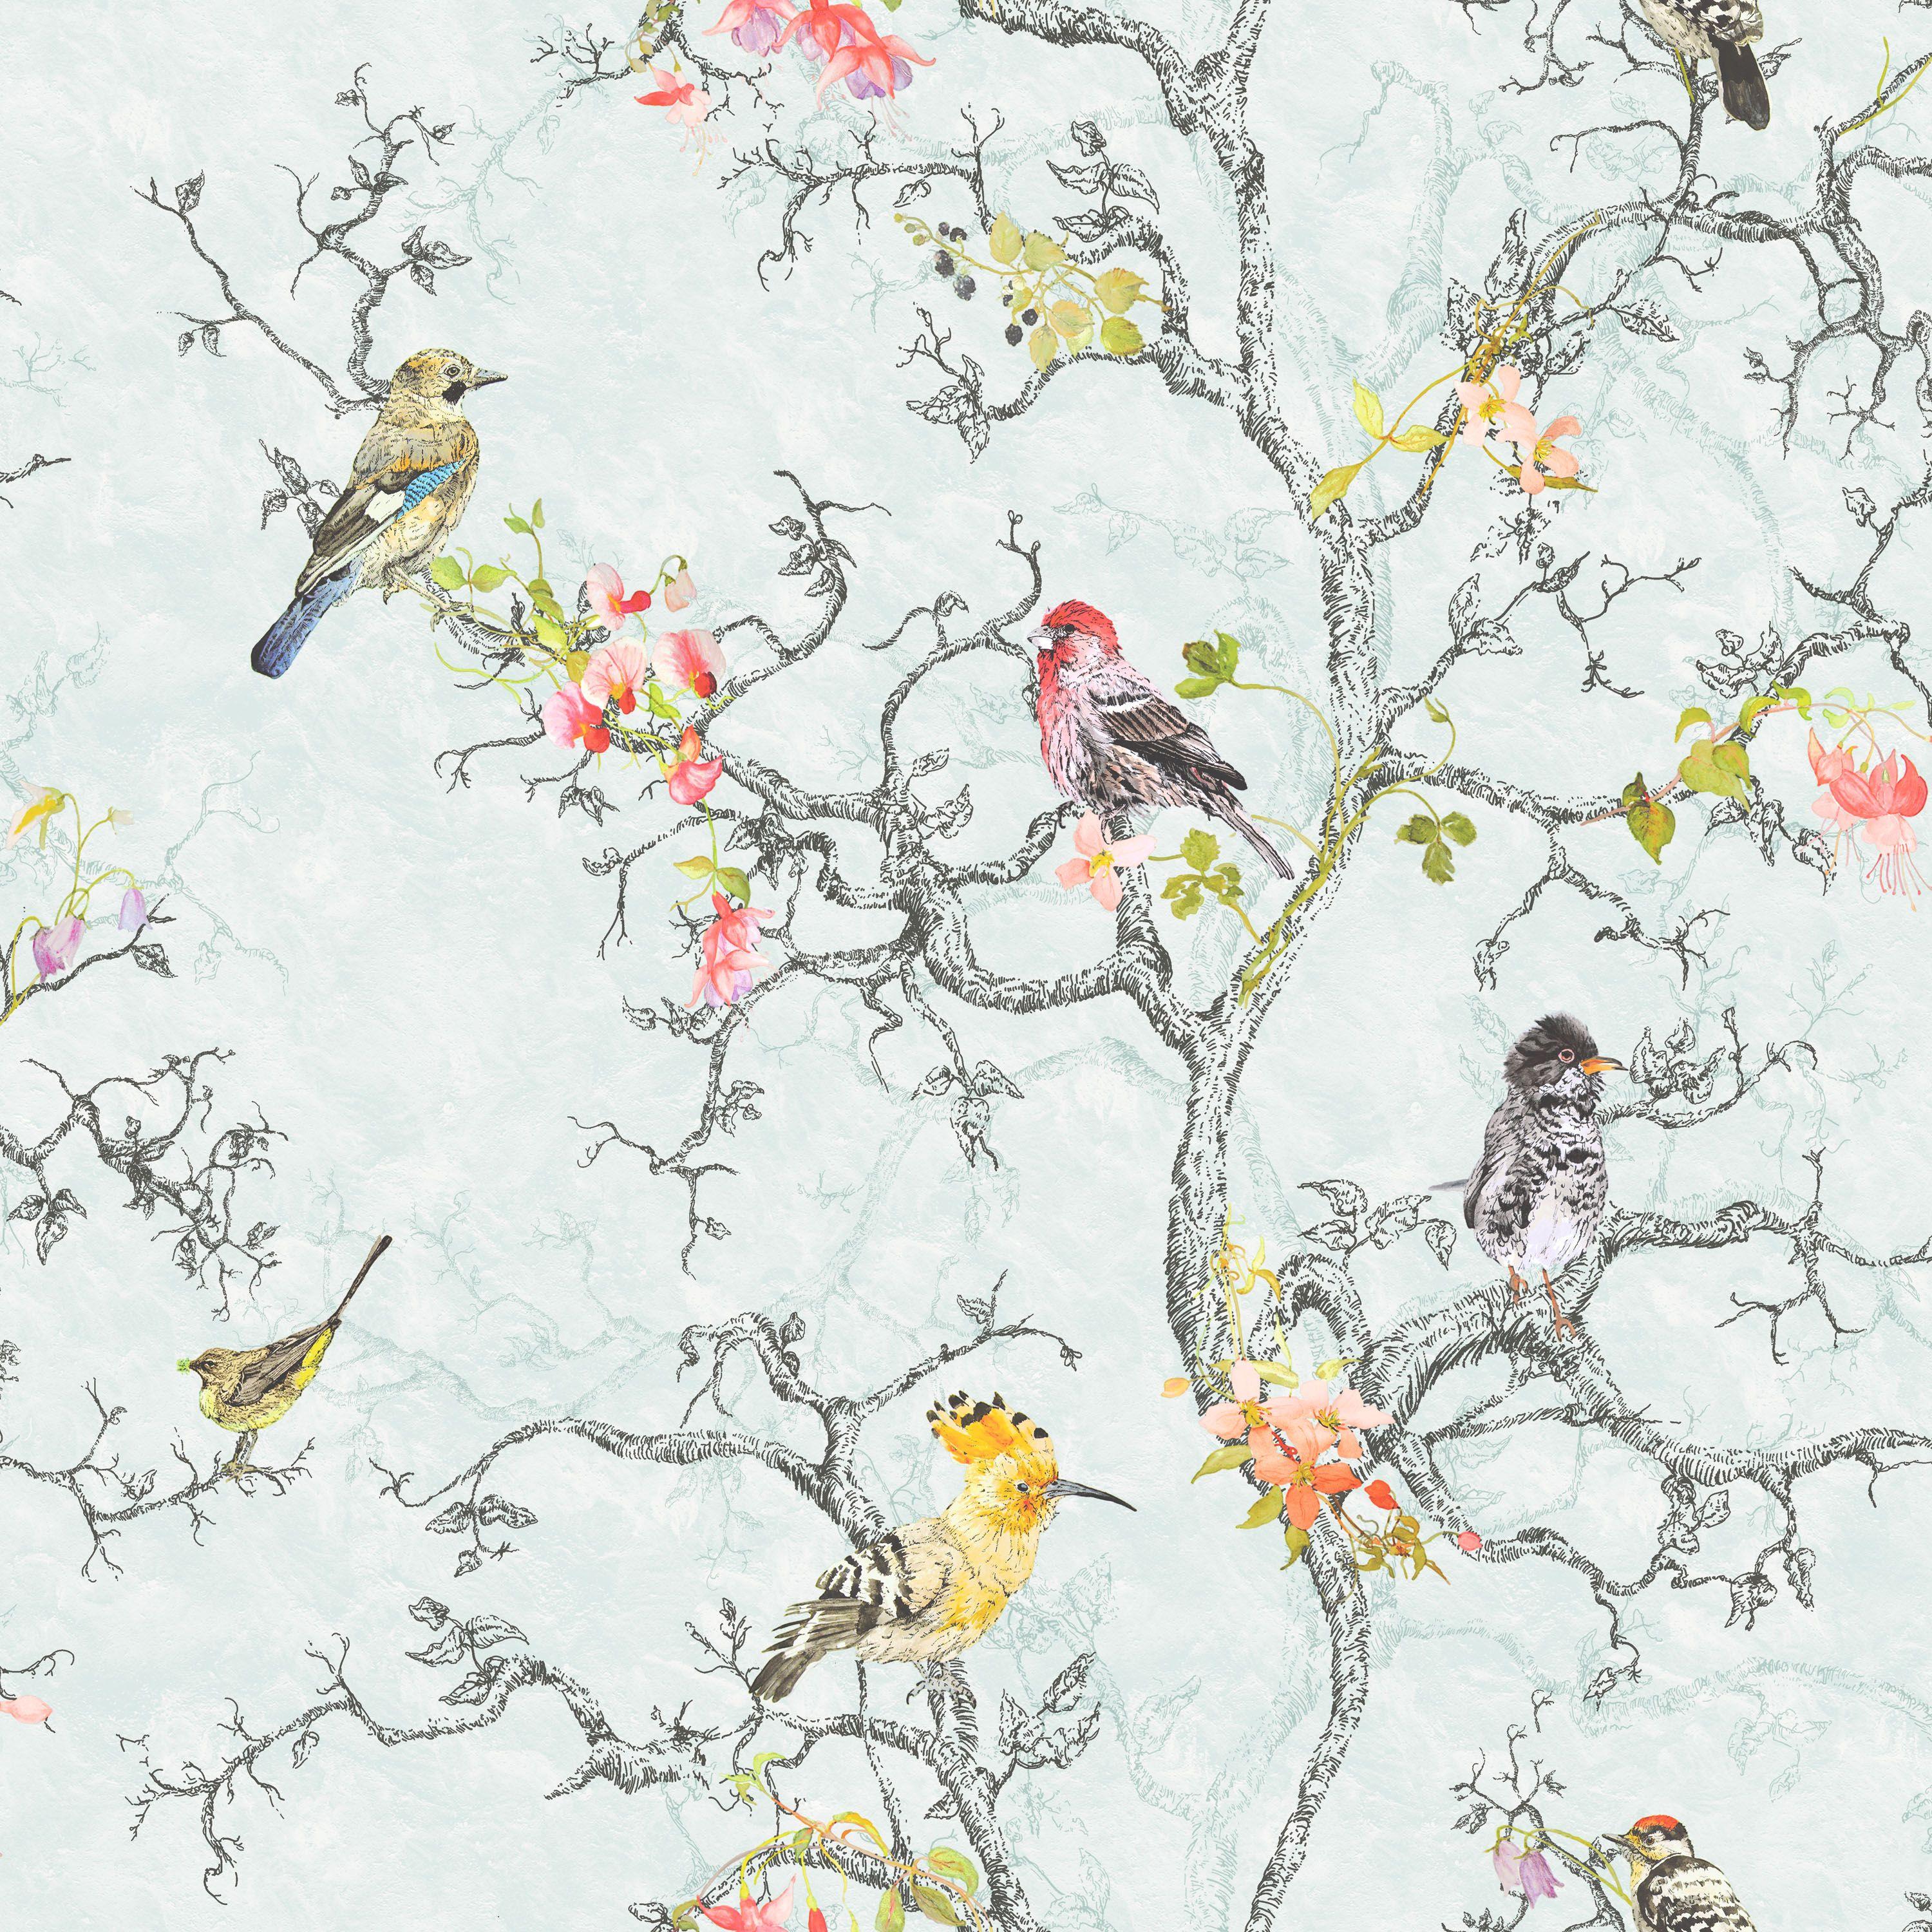 Southeast Asia Flower Bird Wallpaper Murals For Walls Bedroom Photo 